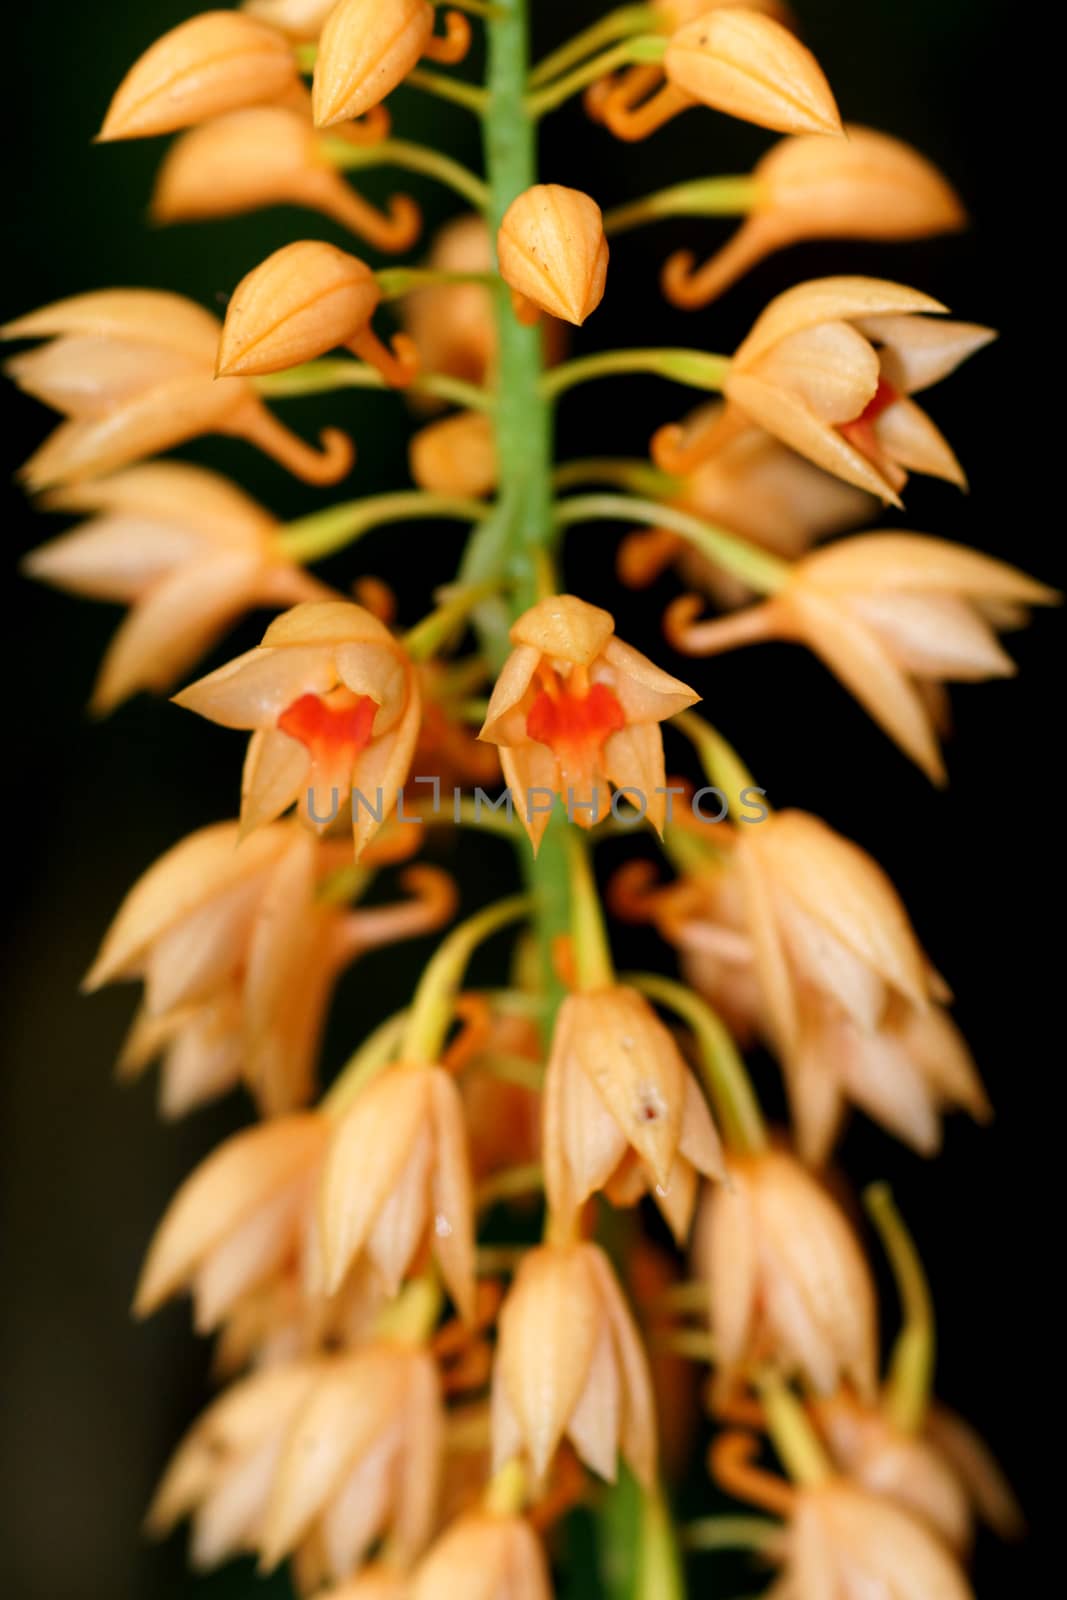 Wild orchid orange soft name Calanthe cardioglossa Schltr.